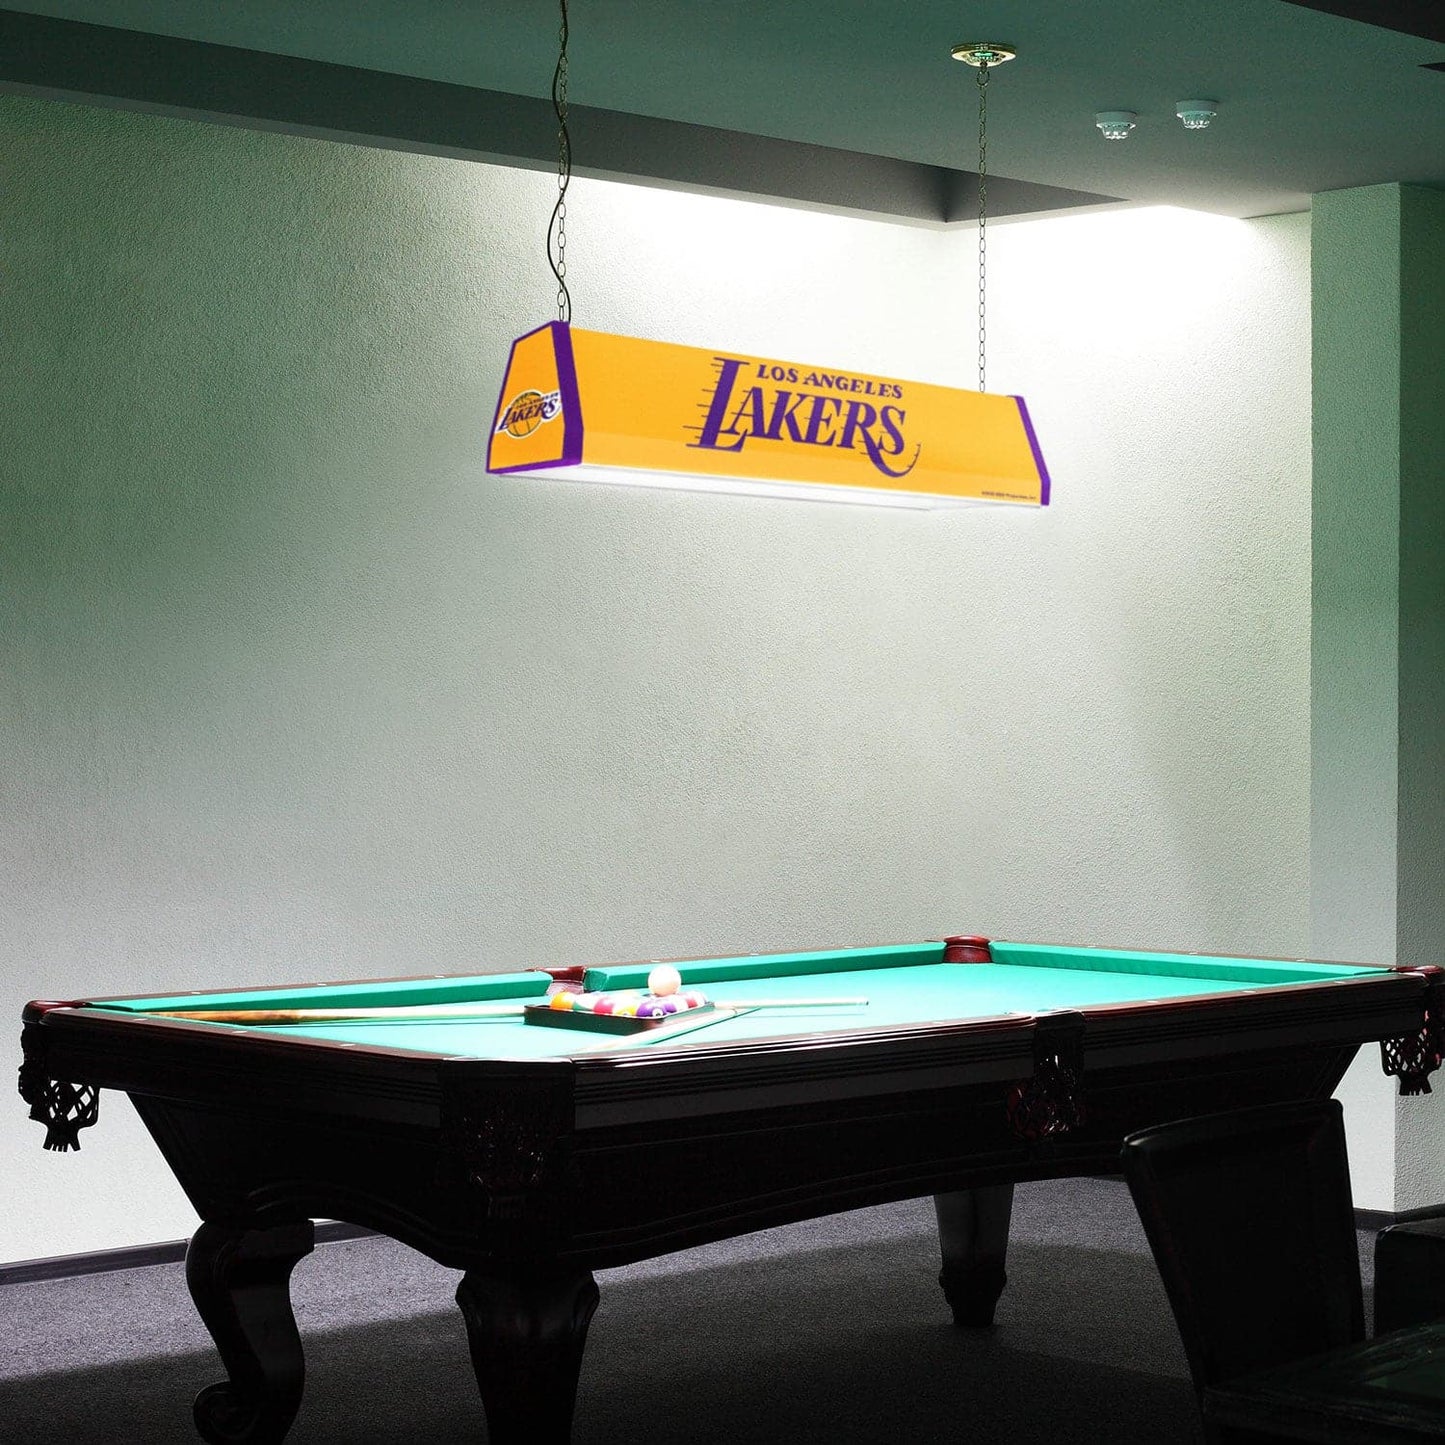 Los Angeles Lakers: Standard Pool Table Light - The Fan-Brand